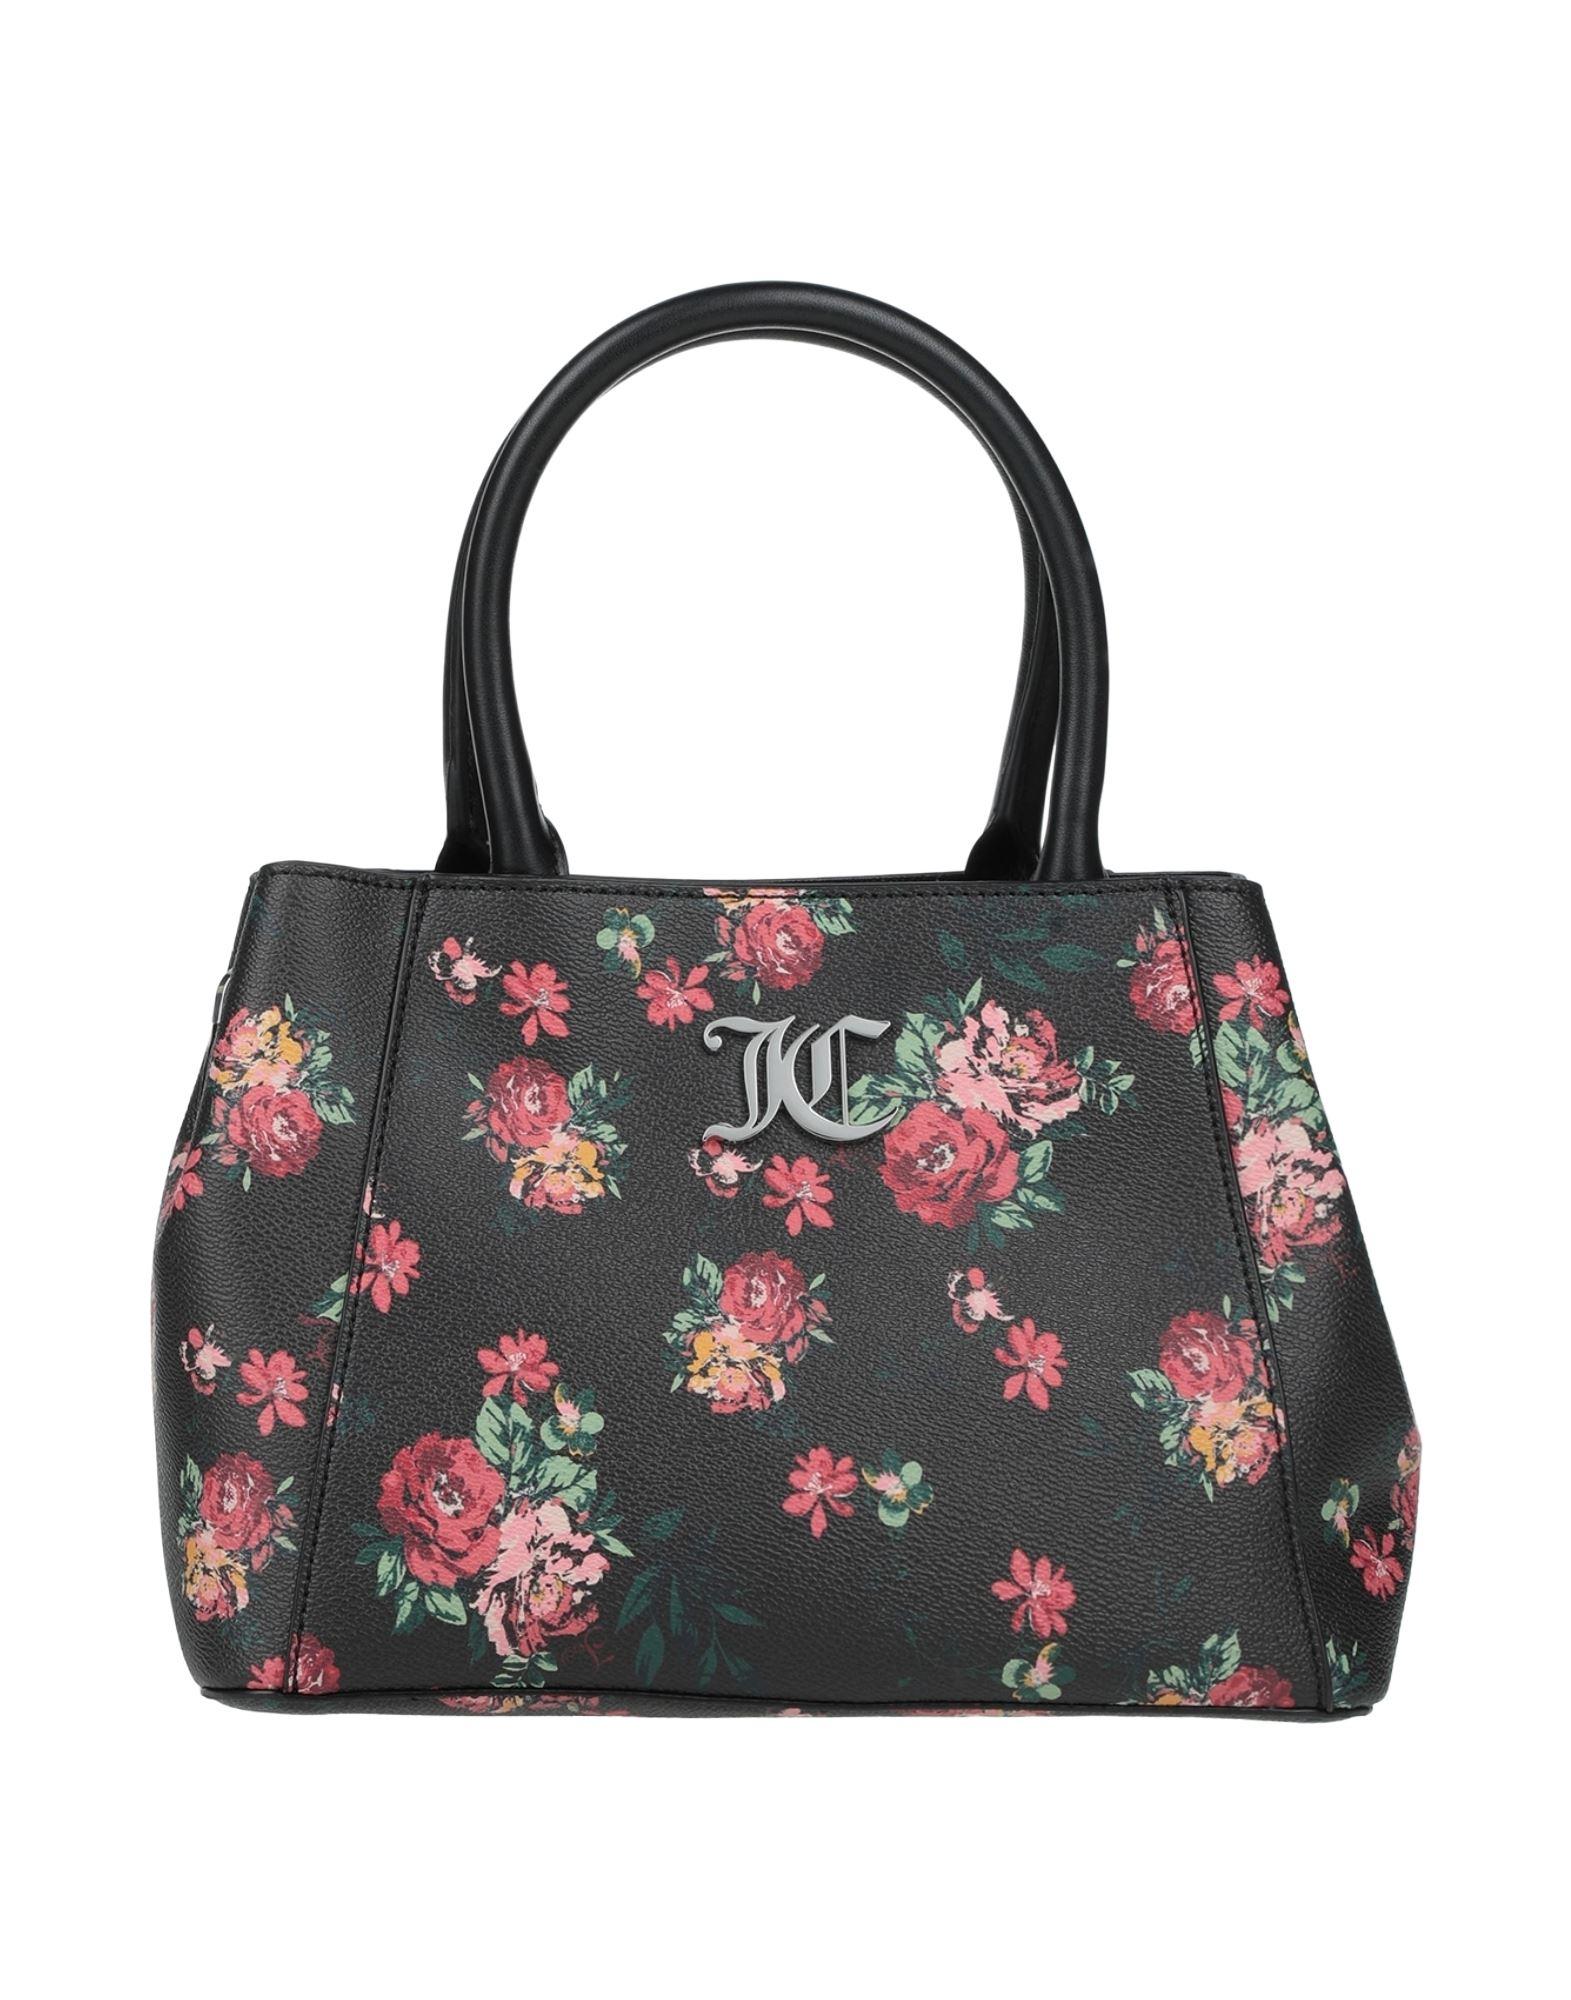 JUICY COUTURE Bag Brighter Than a Diamond Shoulder Bag - Black | eBay